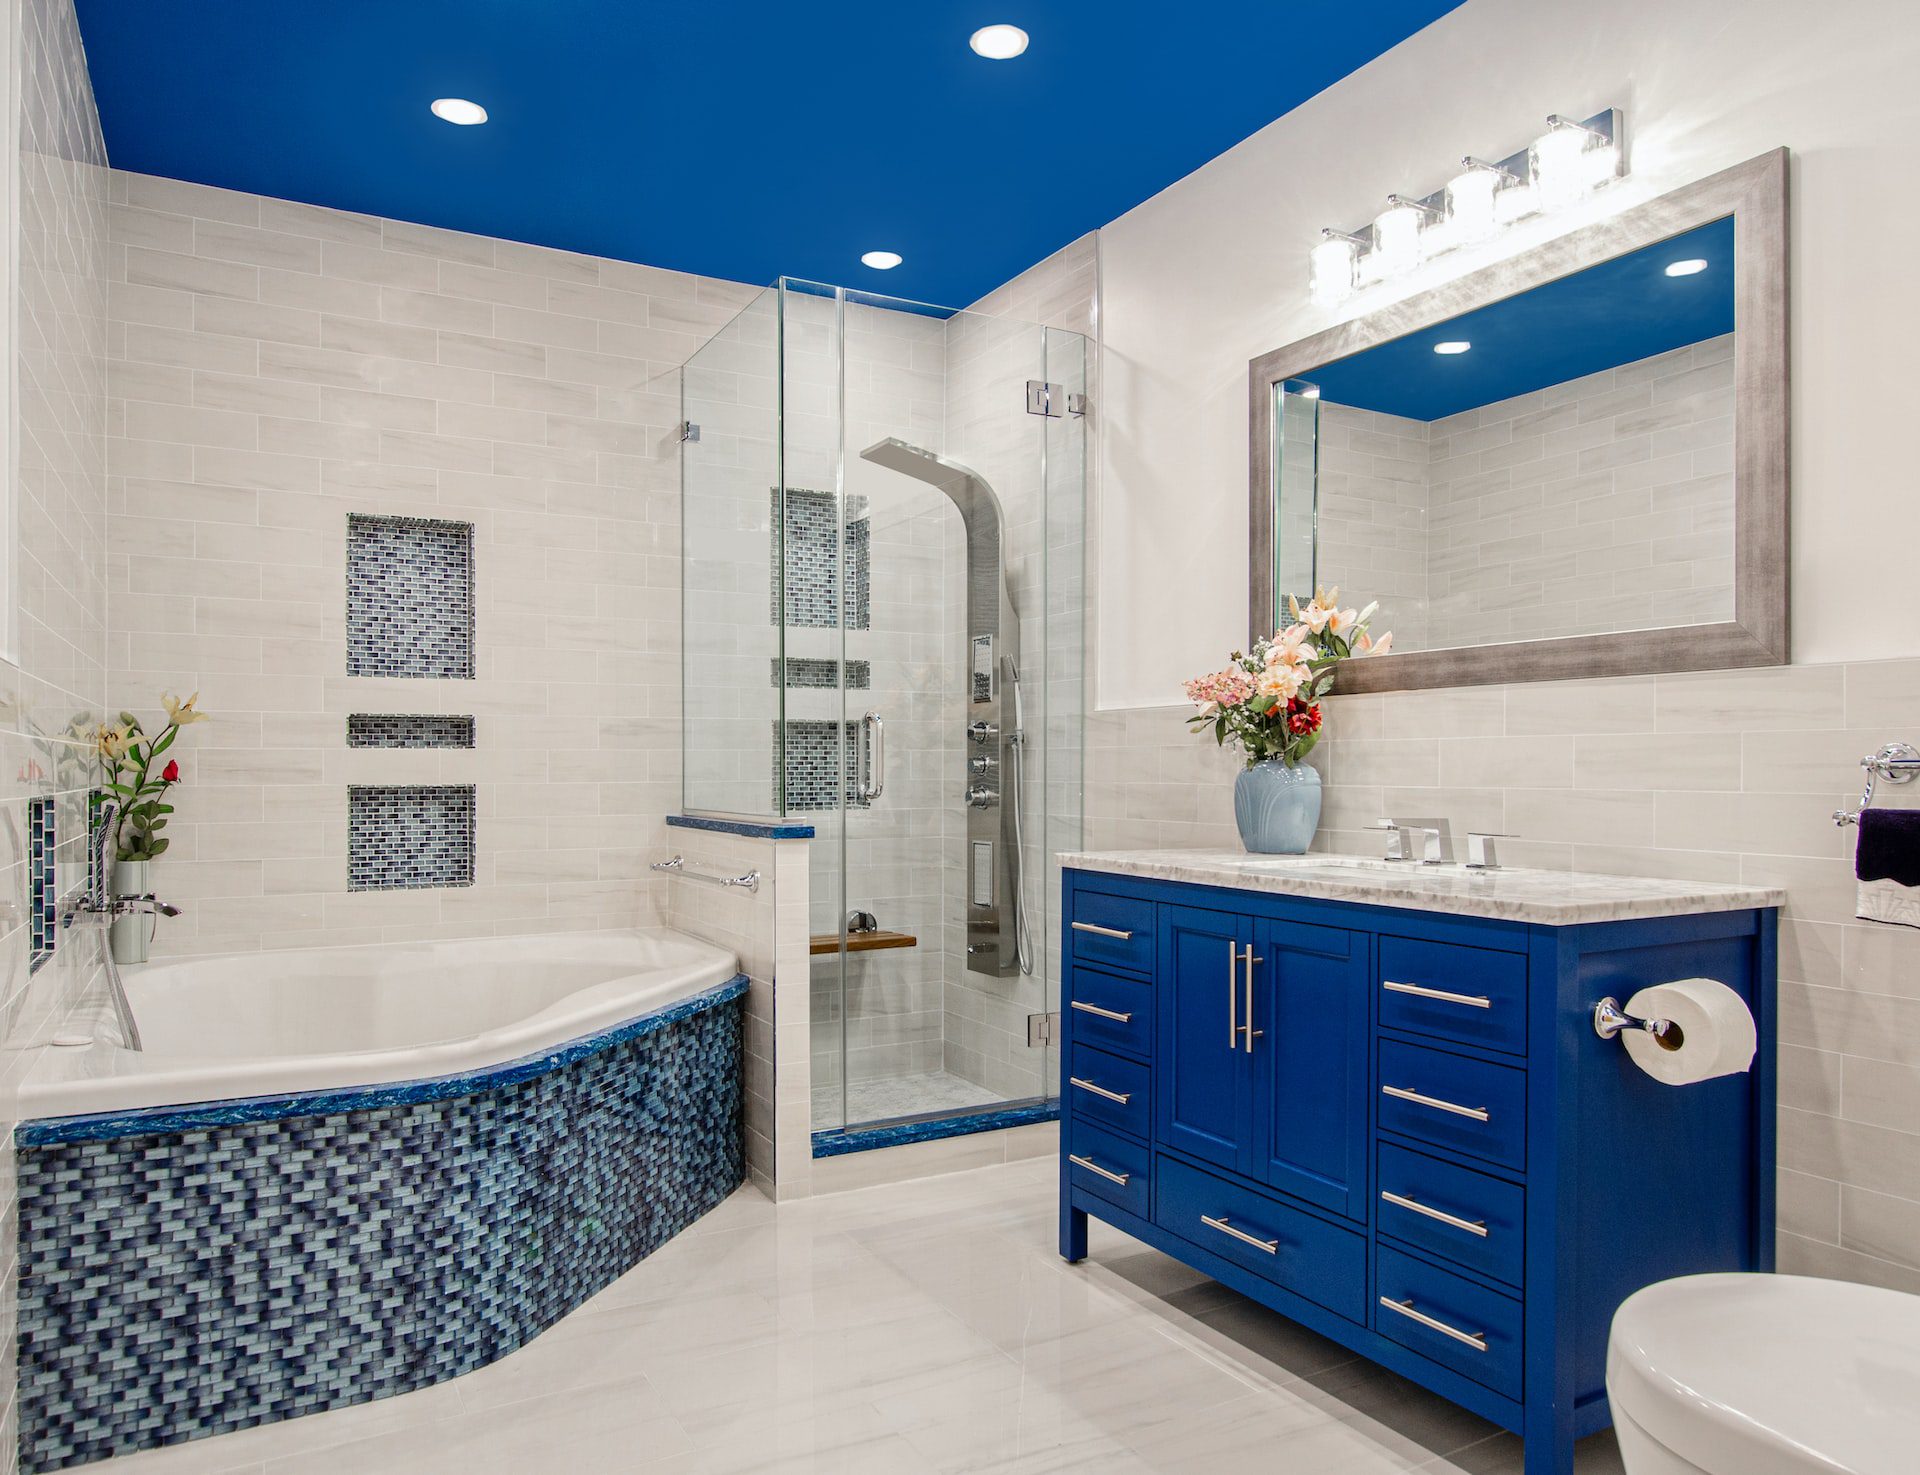 Bathroom Remodeling Blue Shower And Tub